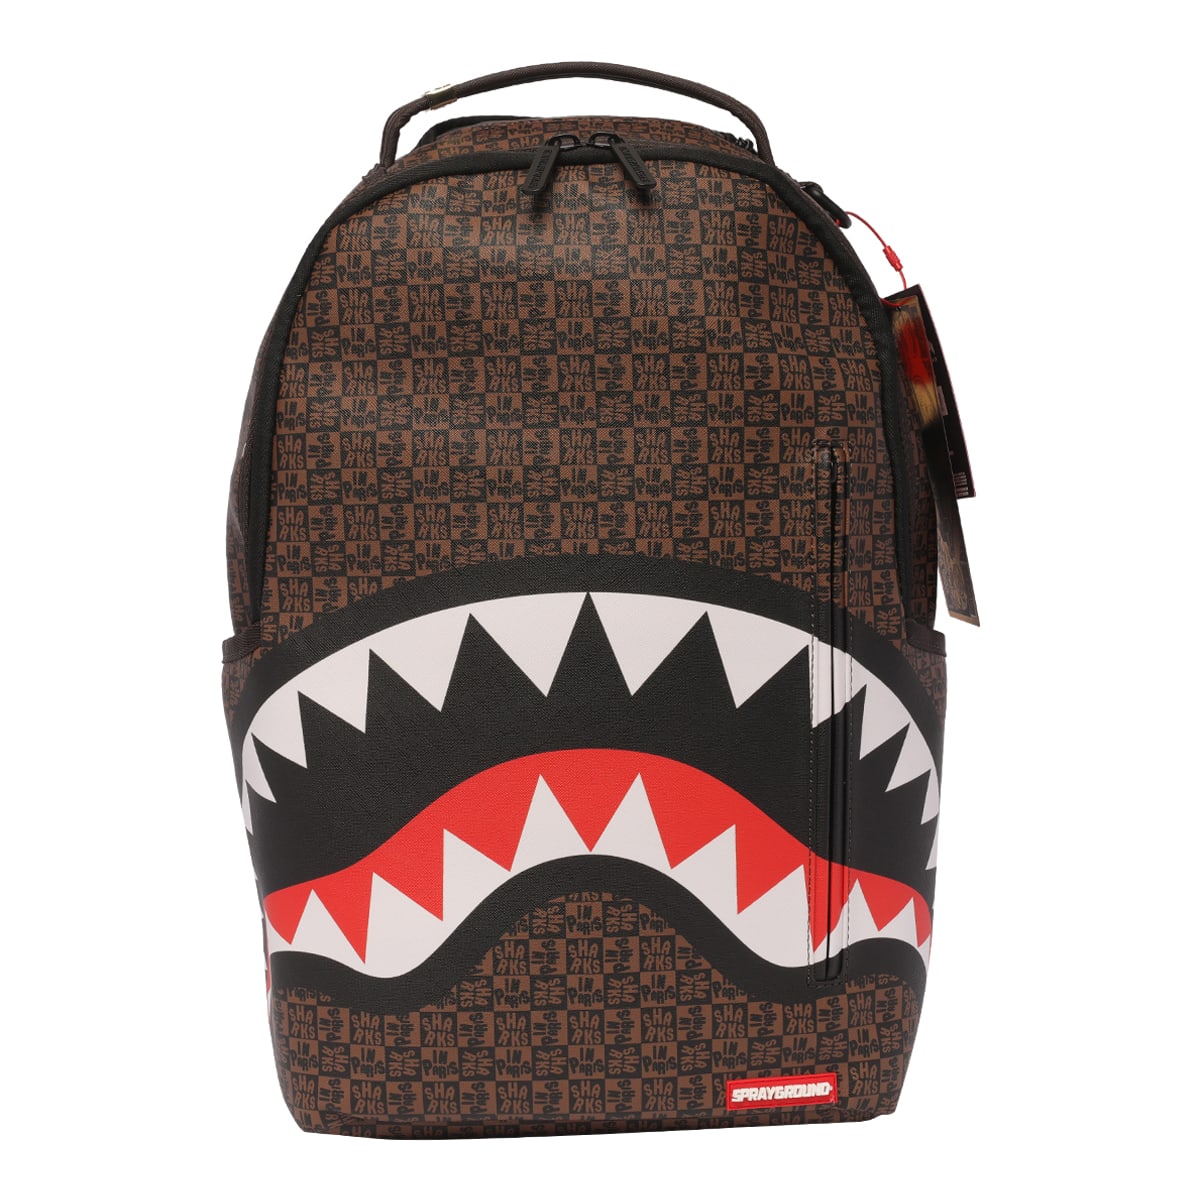 Sprayground Offended Shark Backpack - Brown